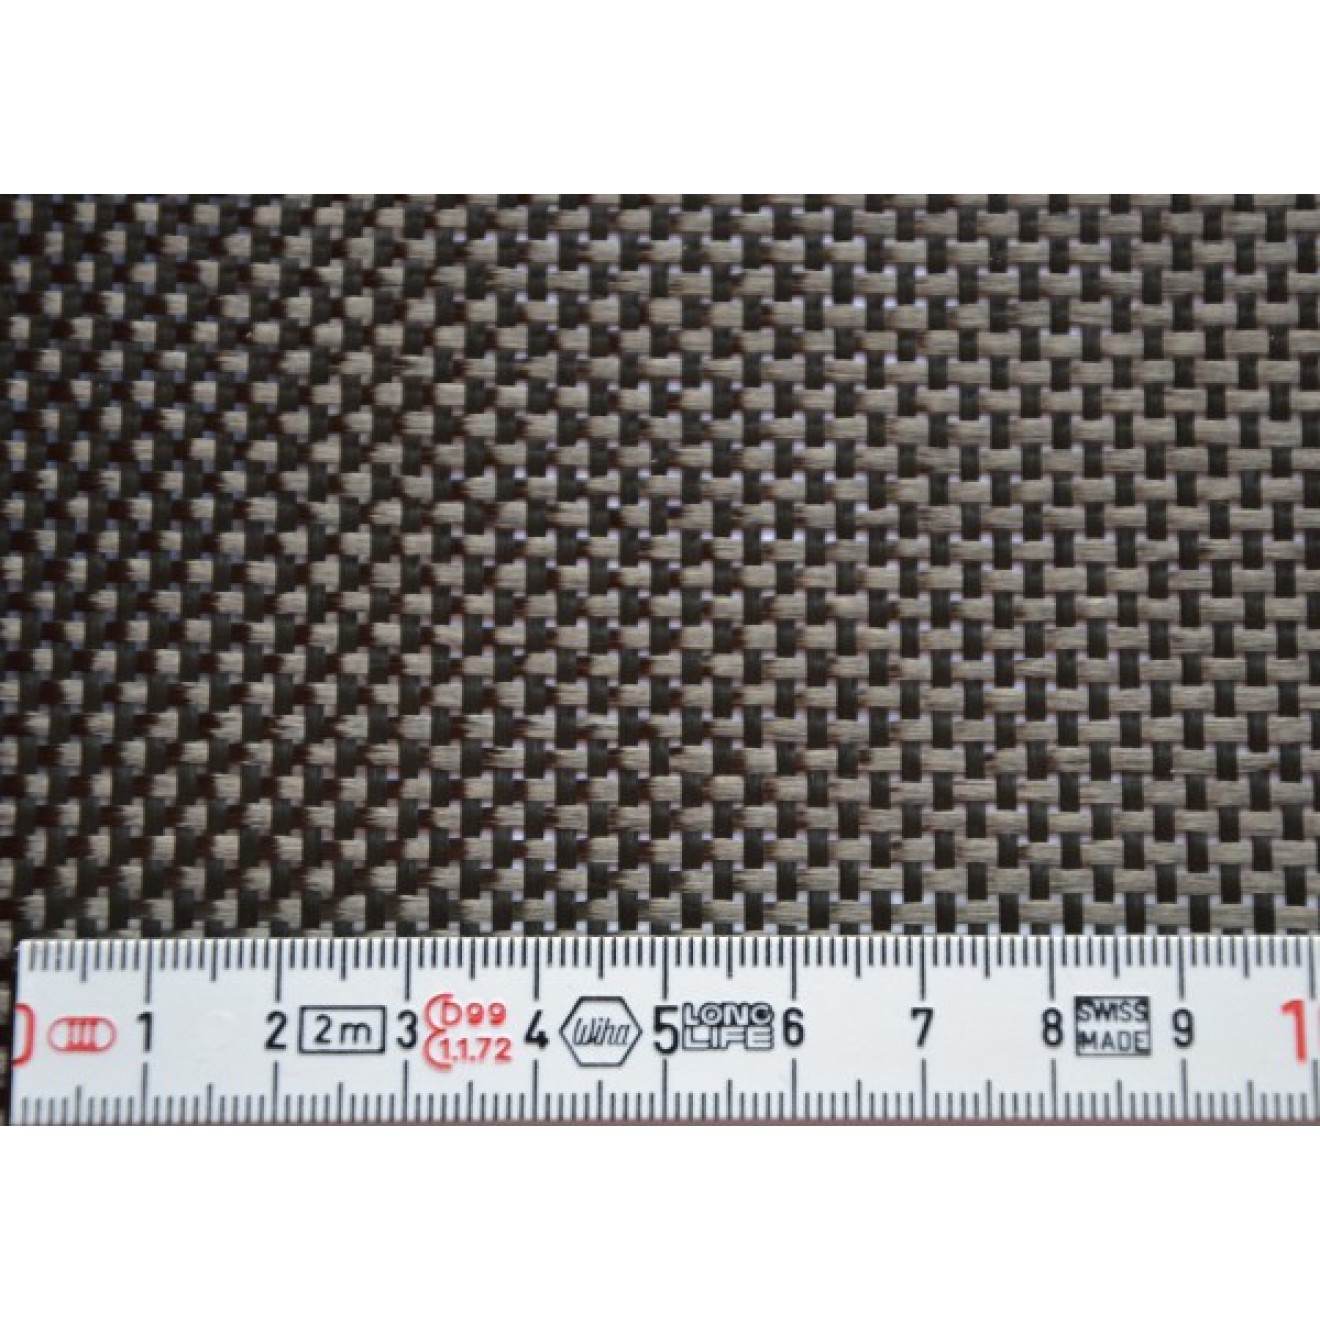 Woven carbon fiber fabric 3K, 160g/m² plain weave, roll length 100m